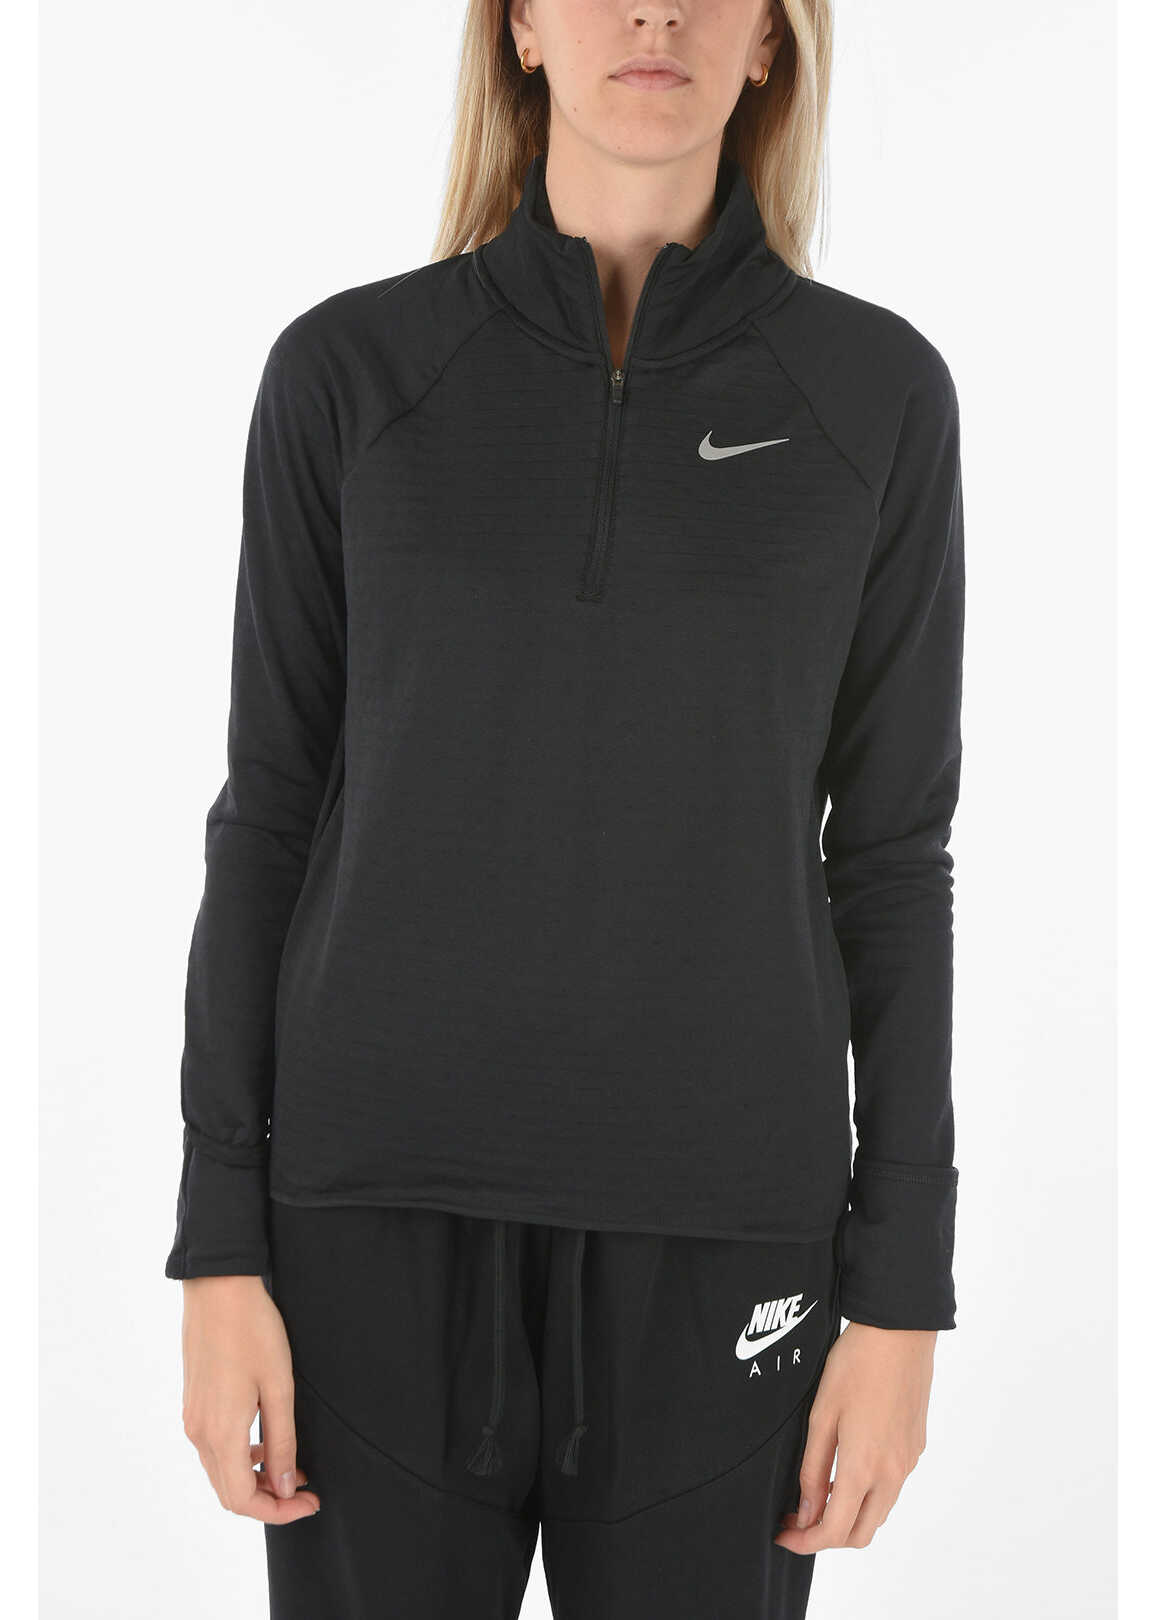 Nike Turtleneck Therma Fit Sweatshirt Black